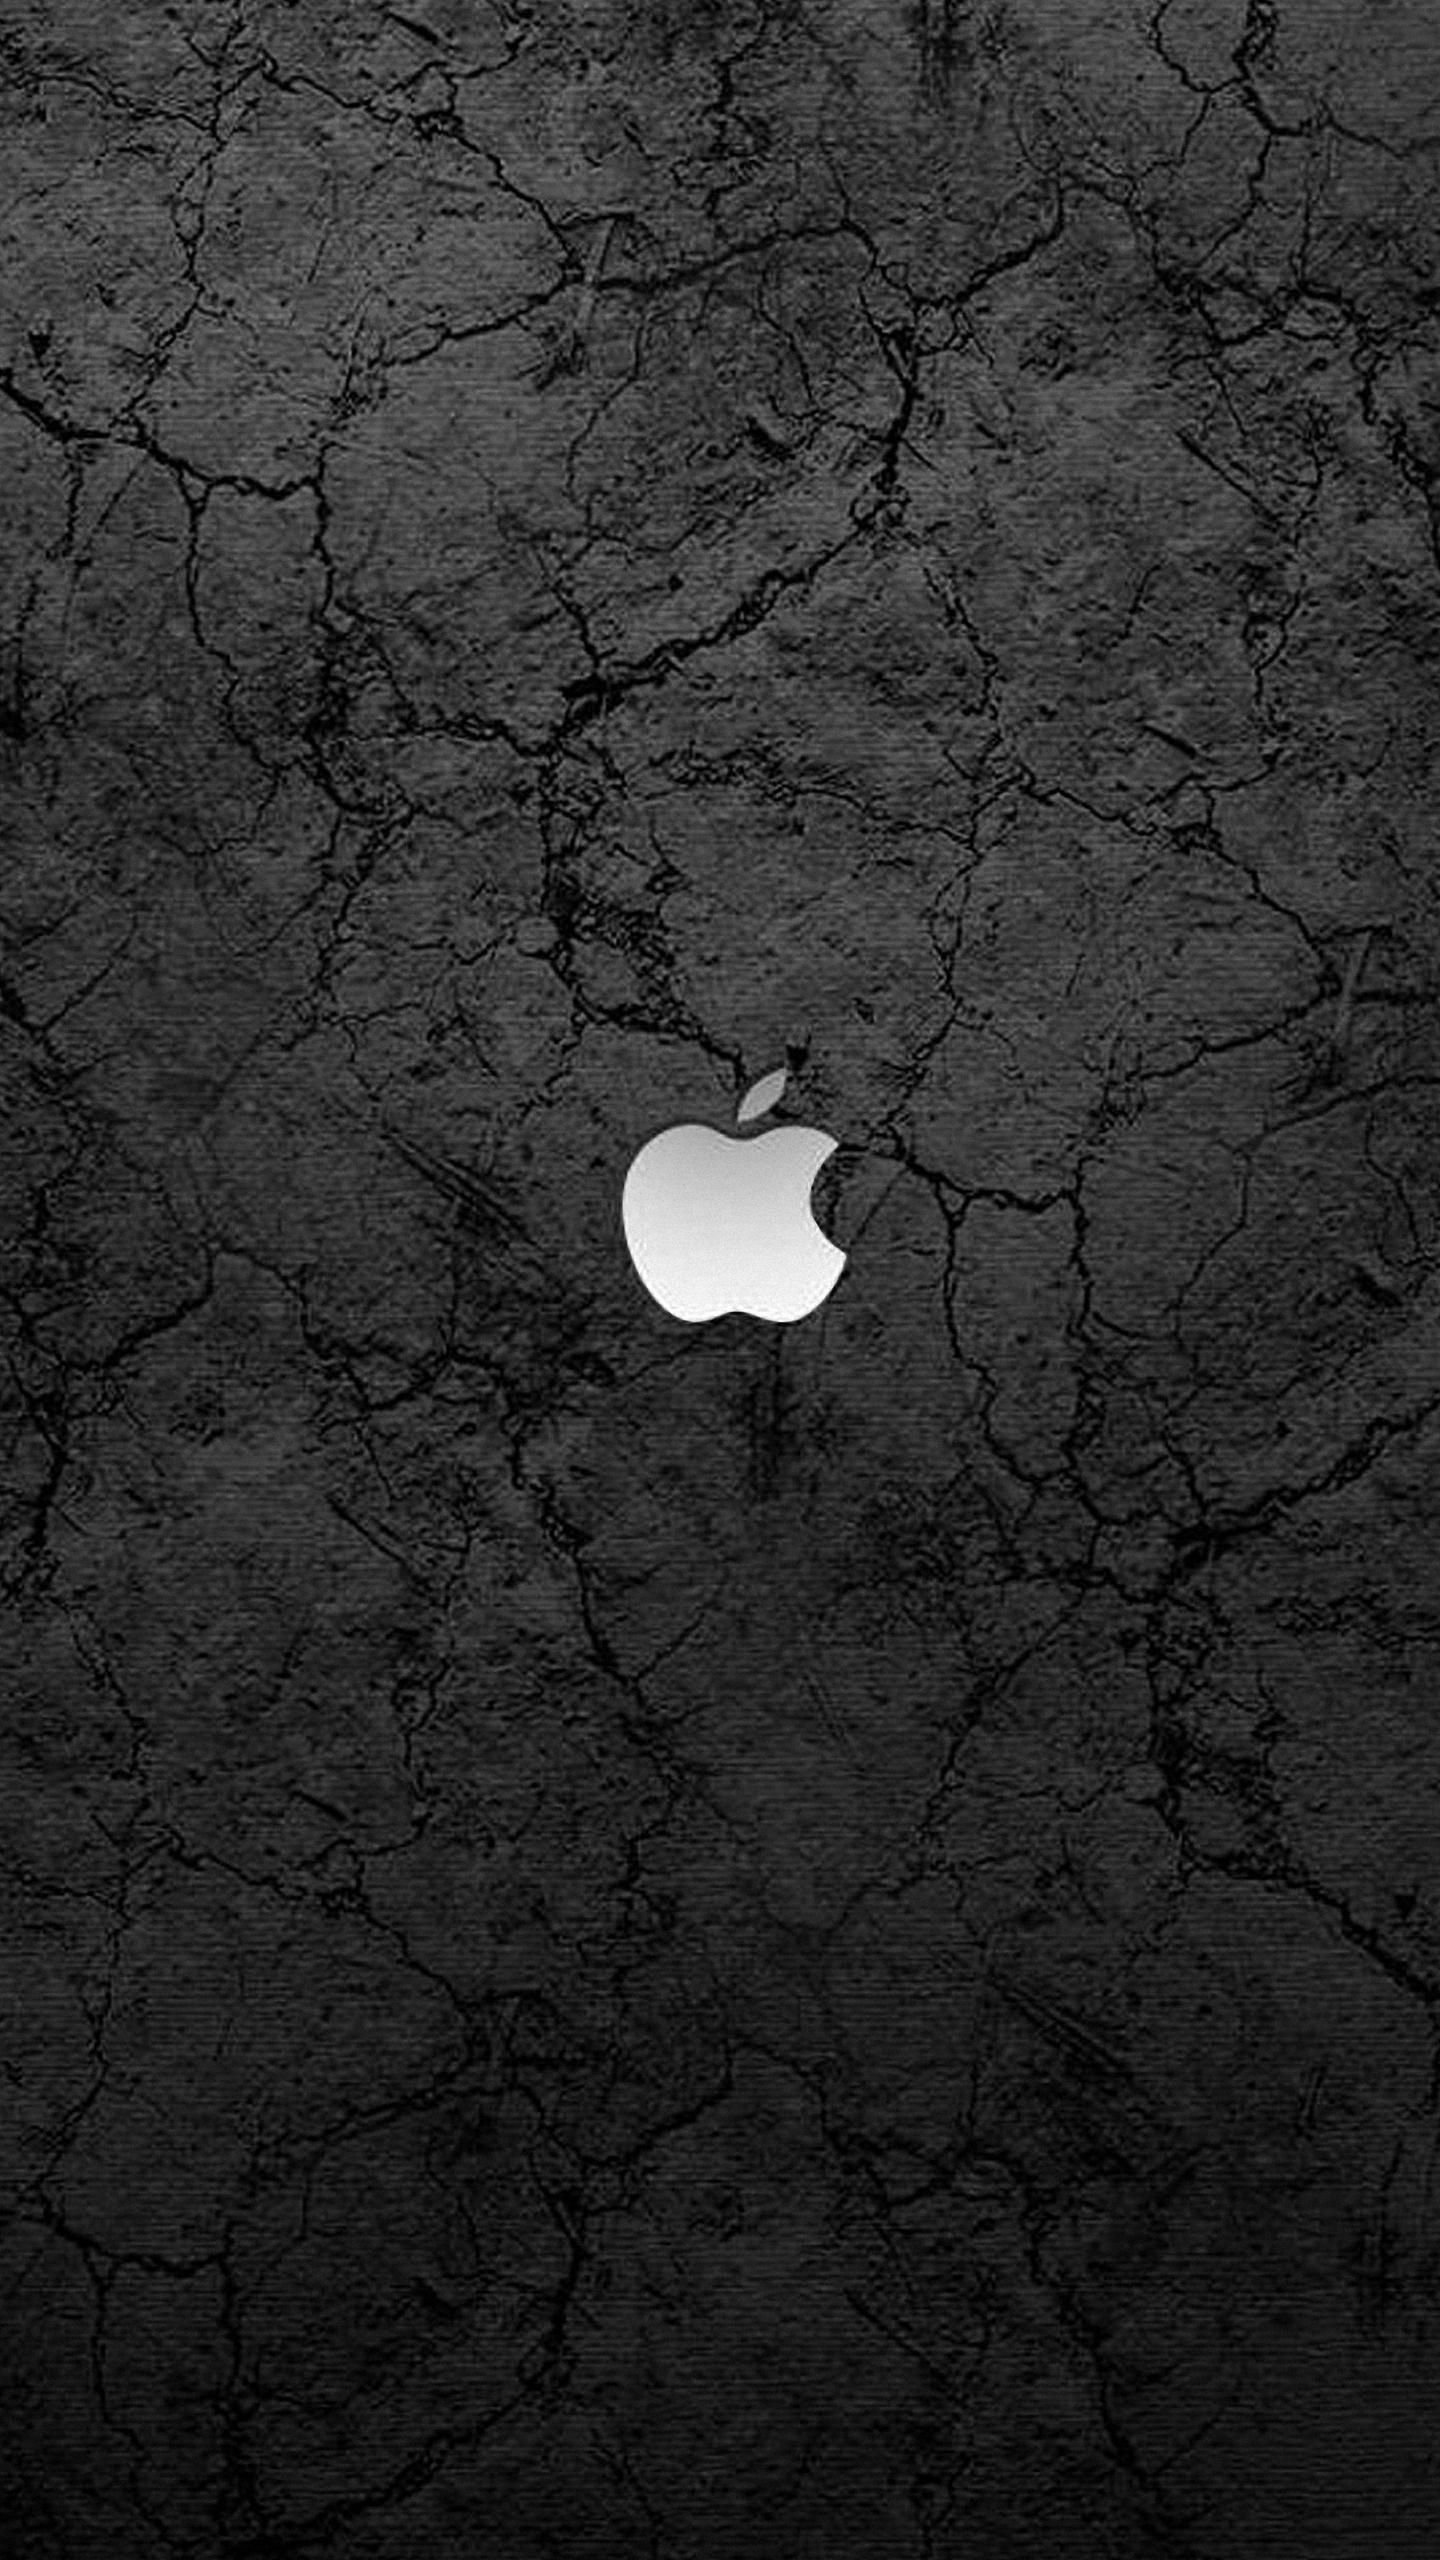 4k Wallpaper iPhone Dark. Black and white wallpaper iphone, Black